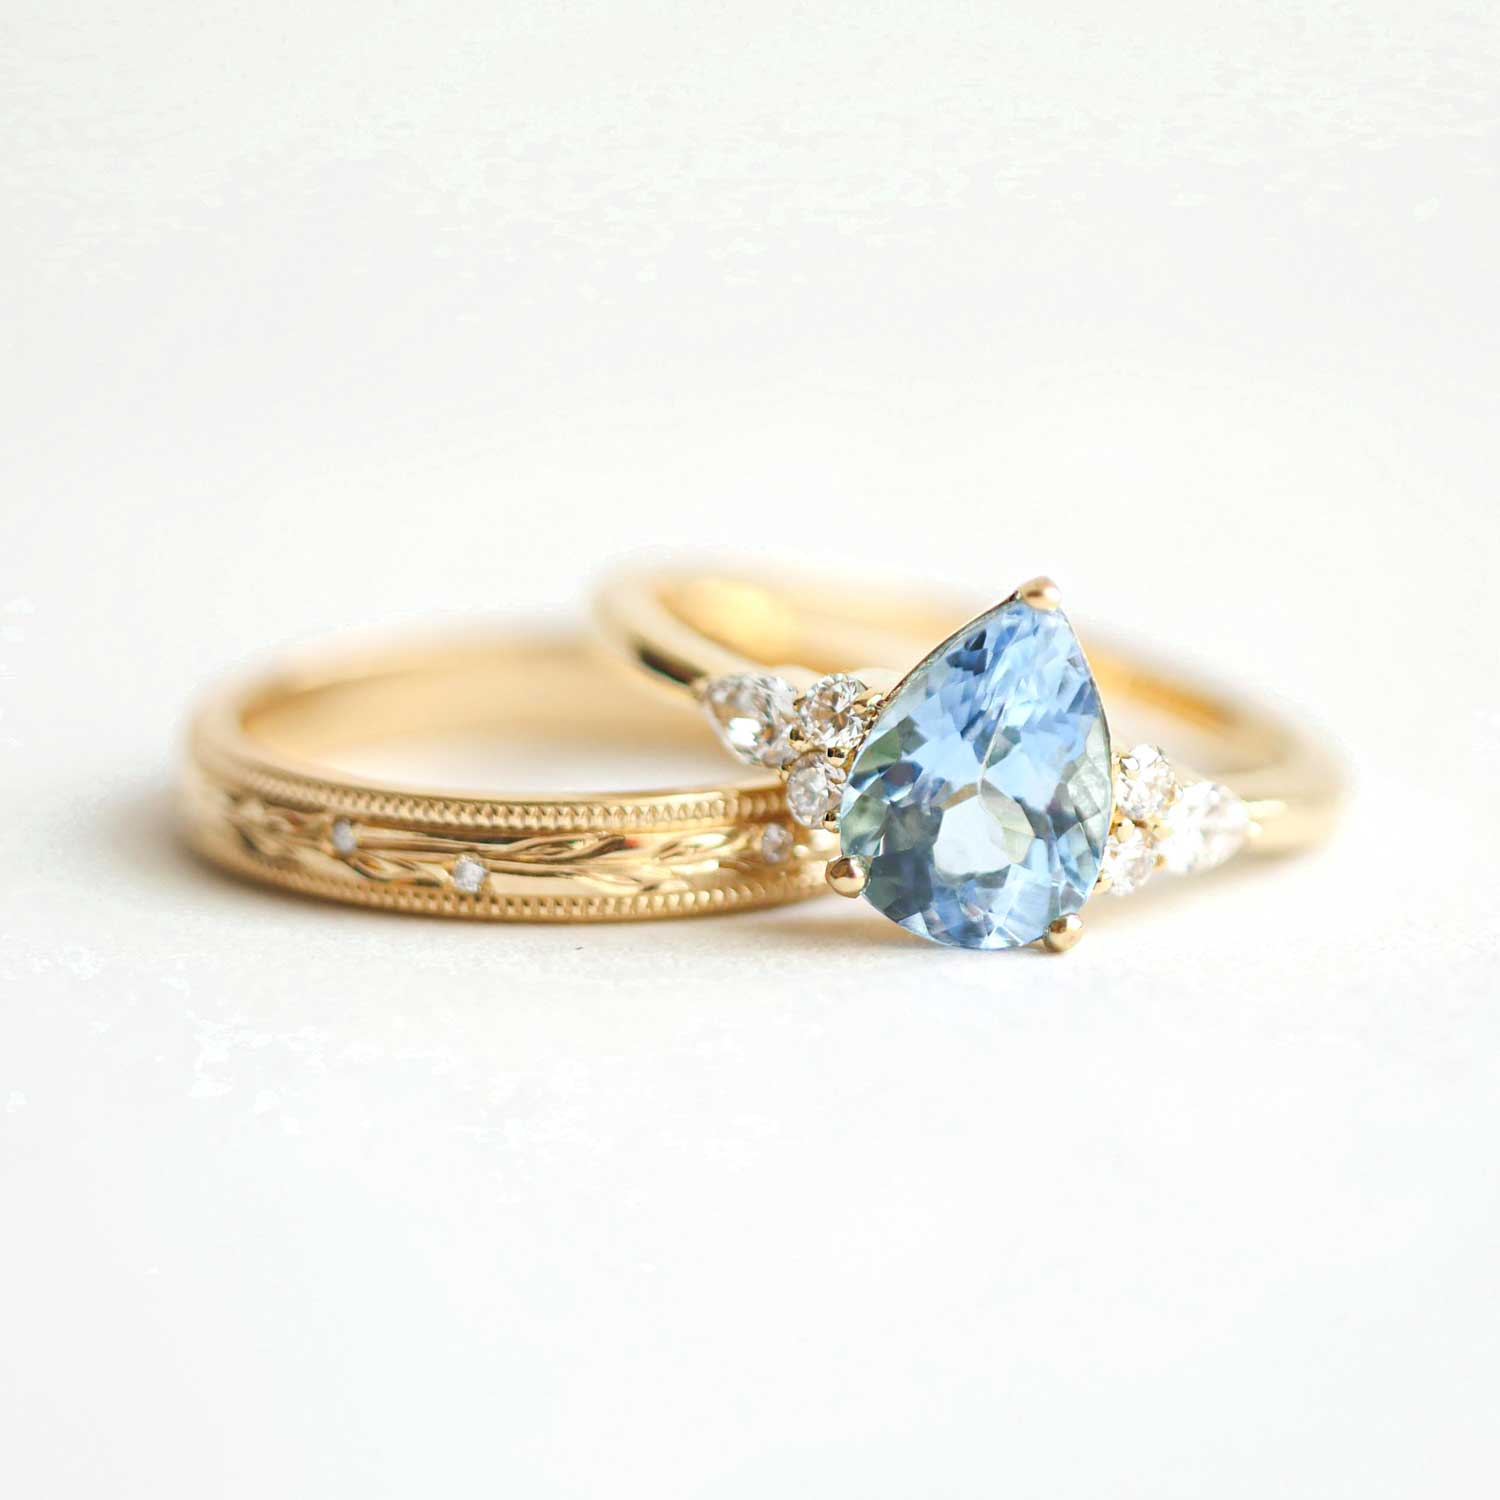 Aquamarine, Pear, and Round Diamond Engagement Ring